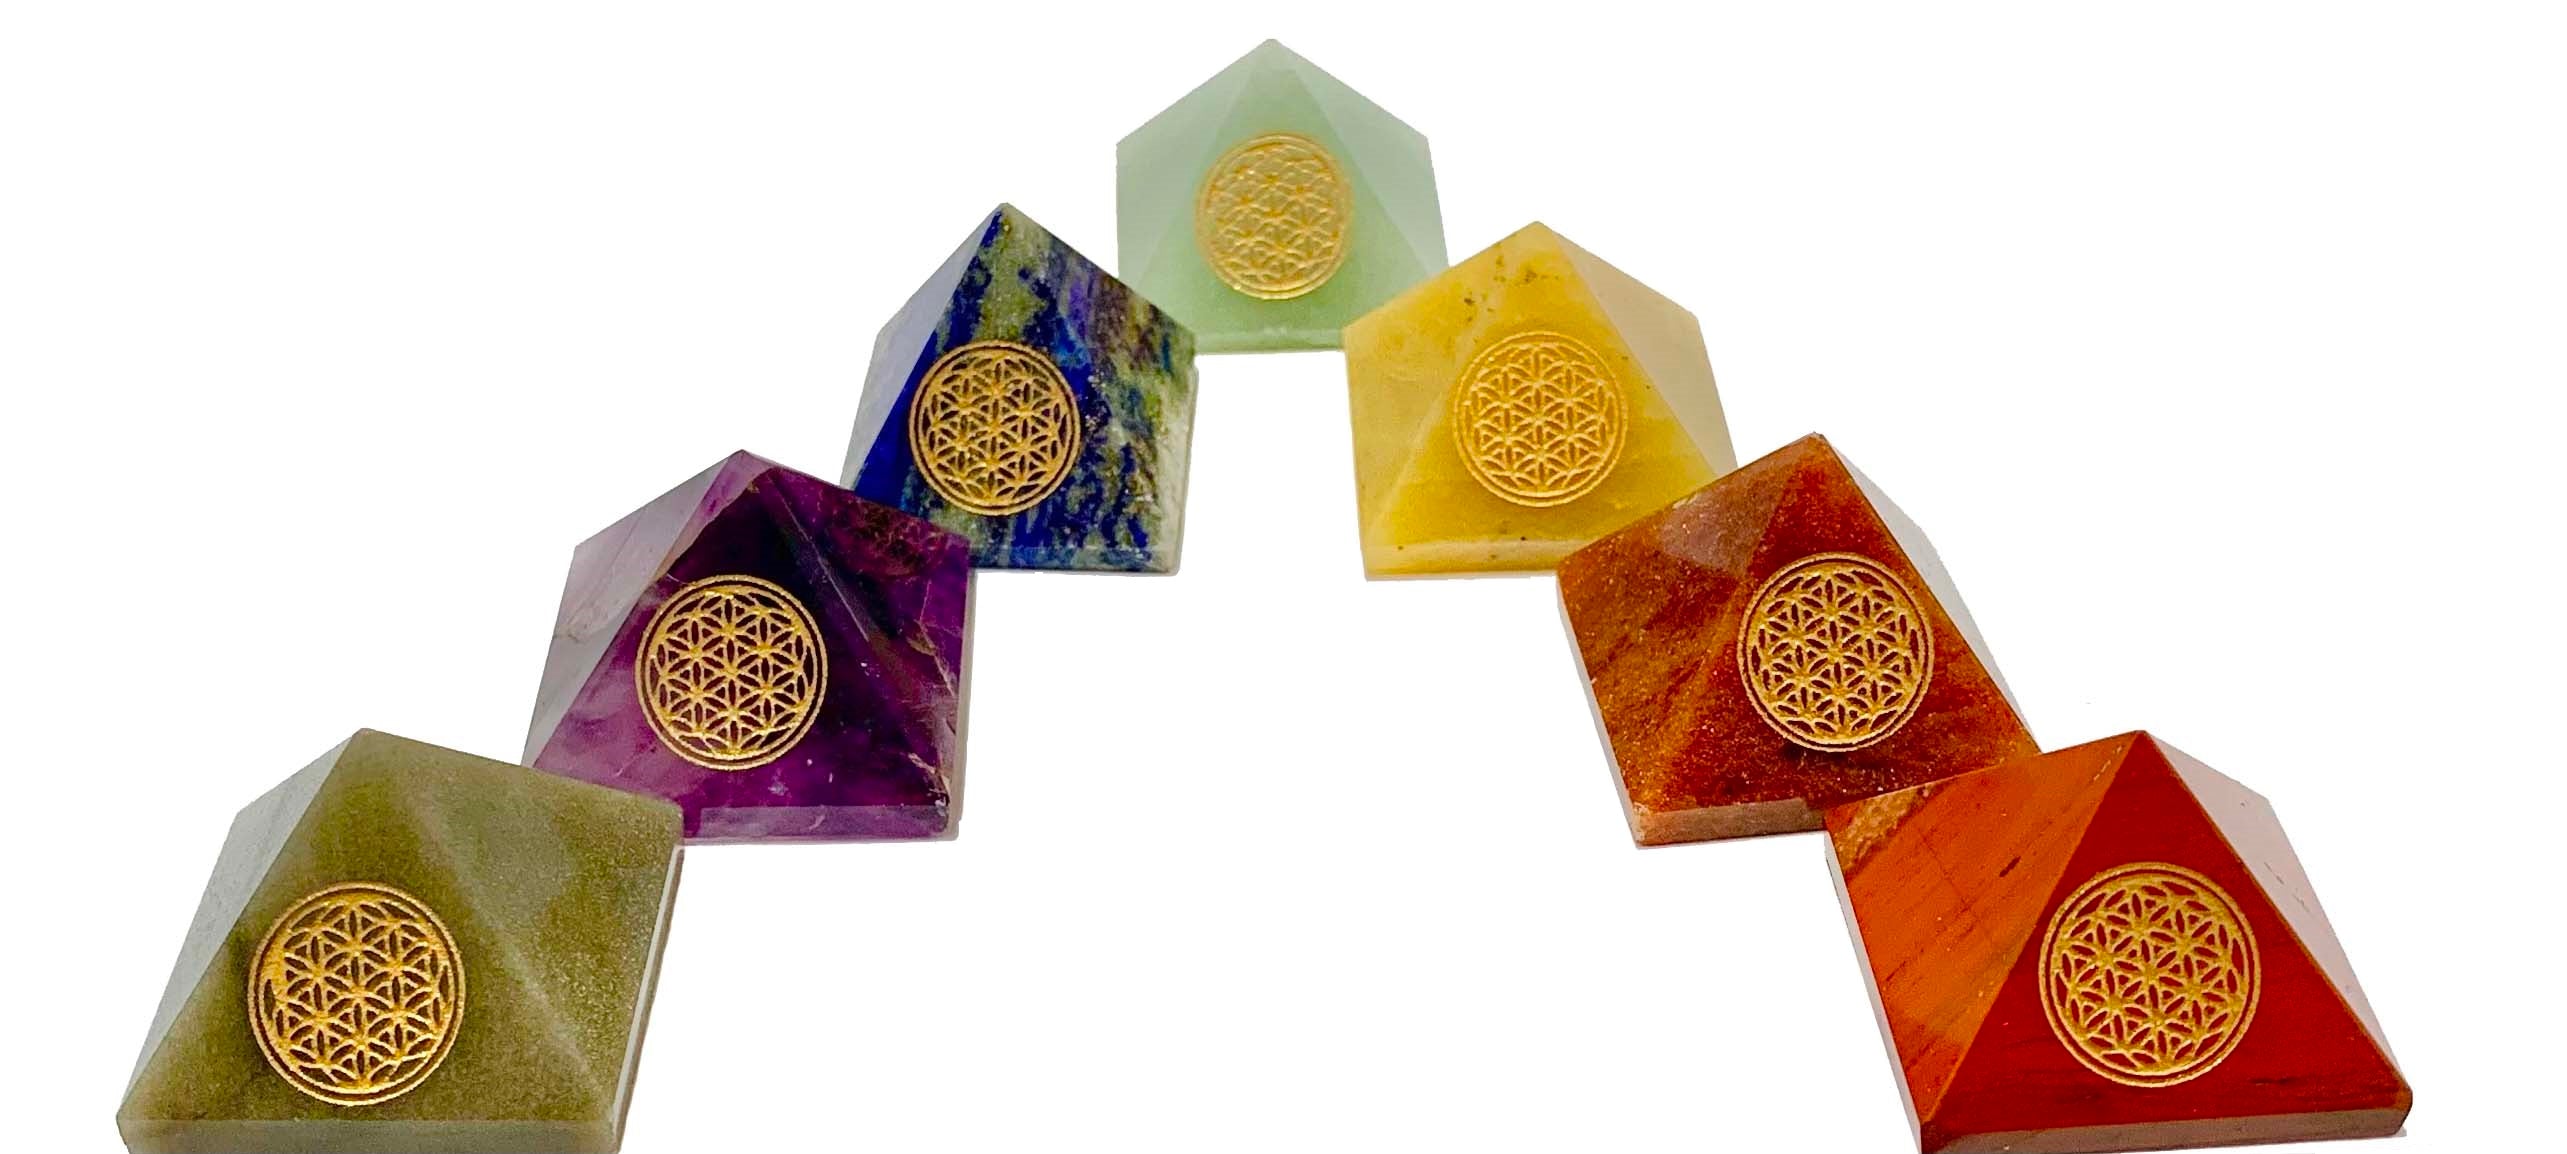 7 Chakras Flower of Life Crystal Pyramid Set